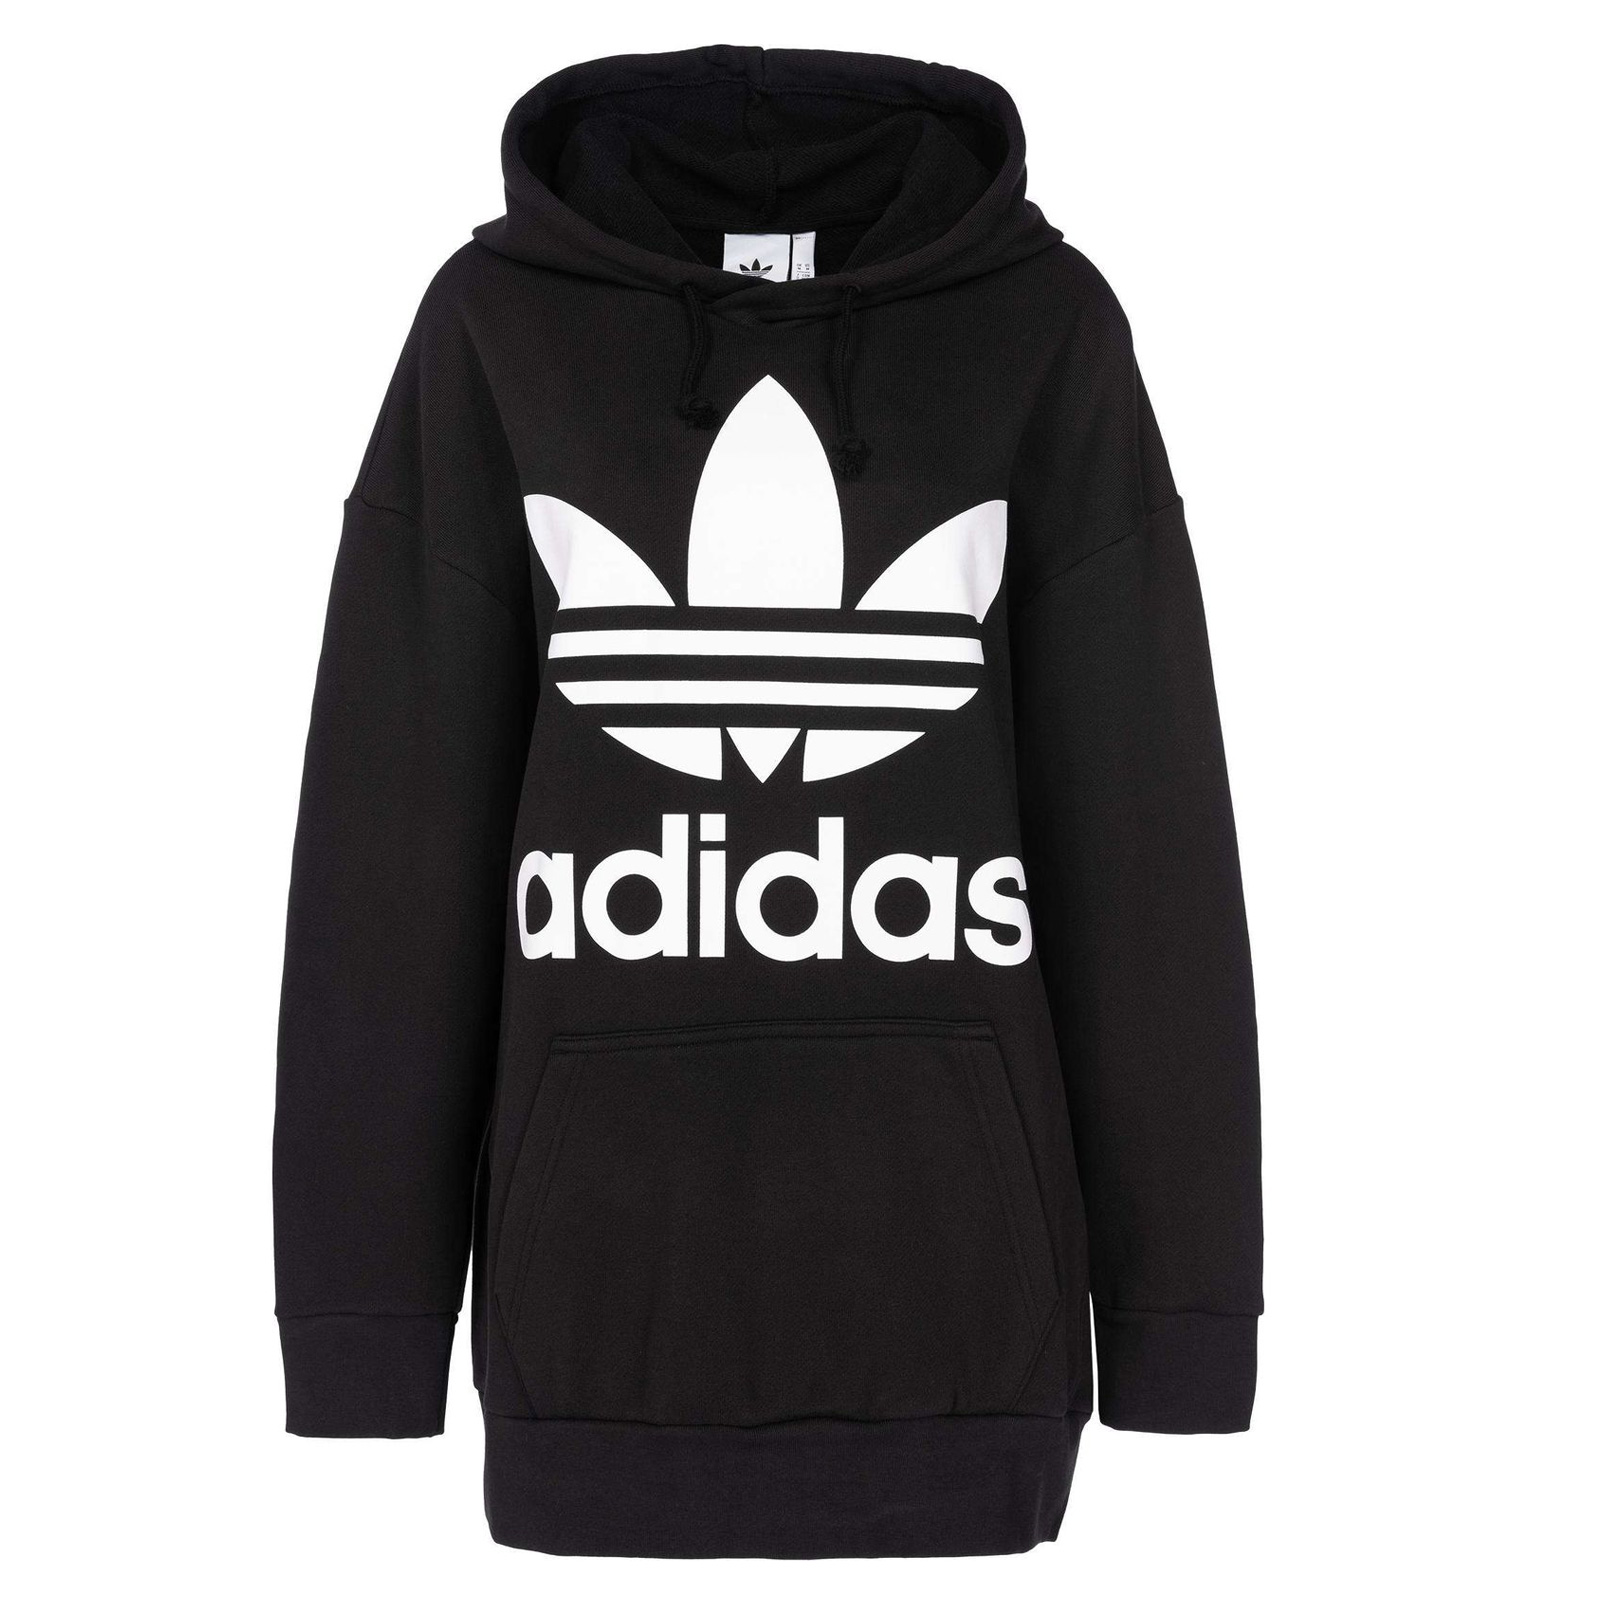 Adidas Originals Oversized Hoodie Huge eBay Trefoil Black Men\'s Hooded Sweatshirt 